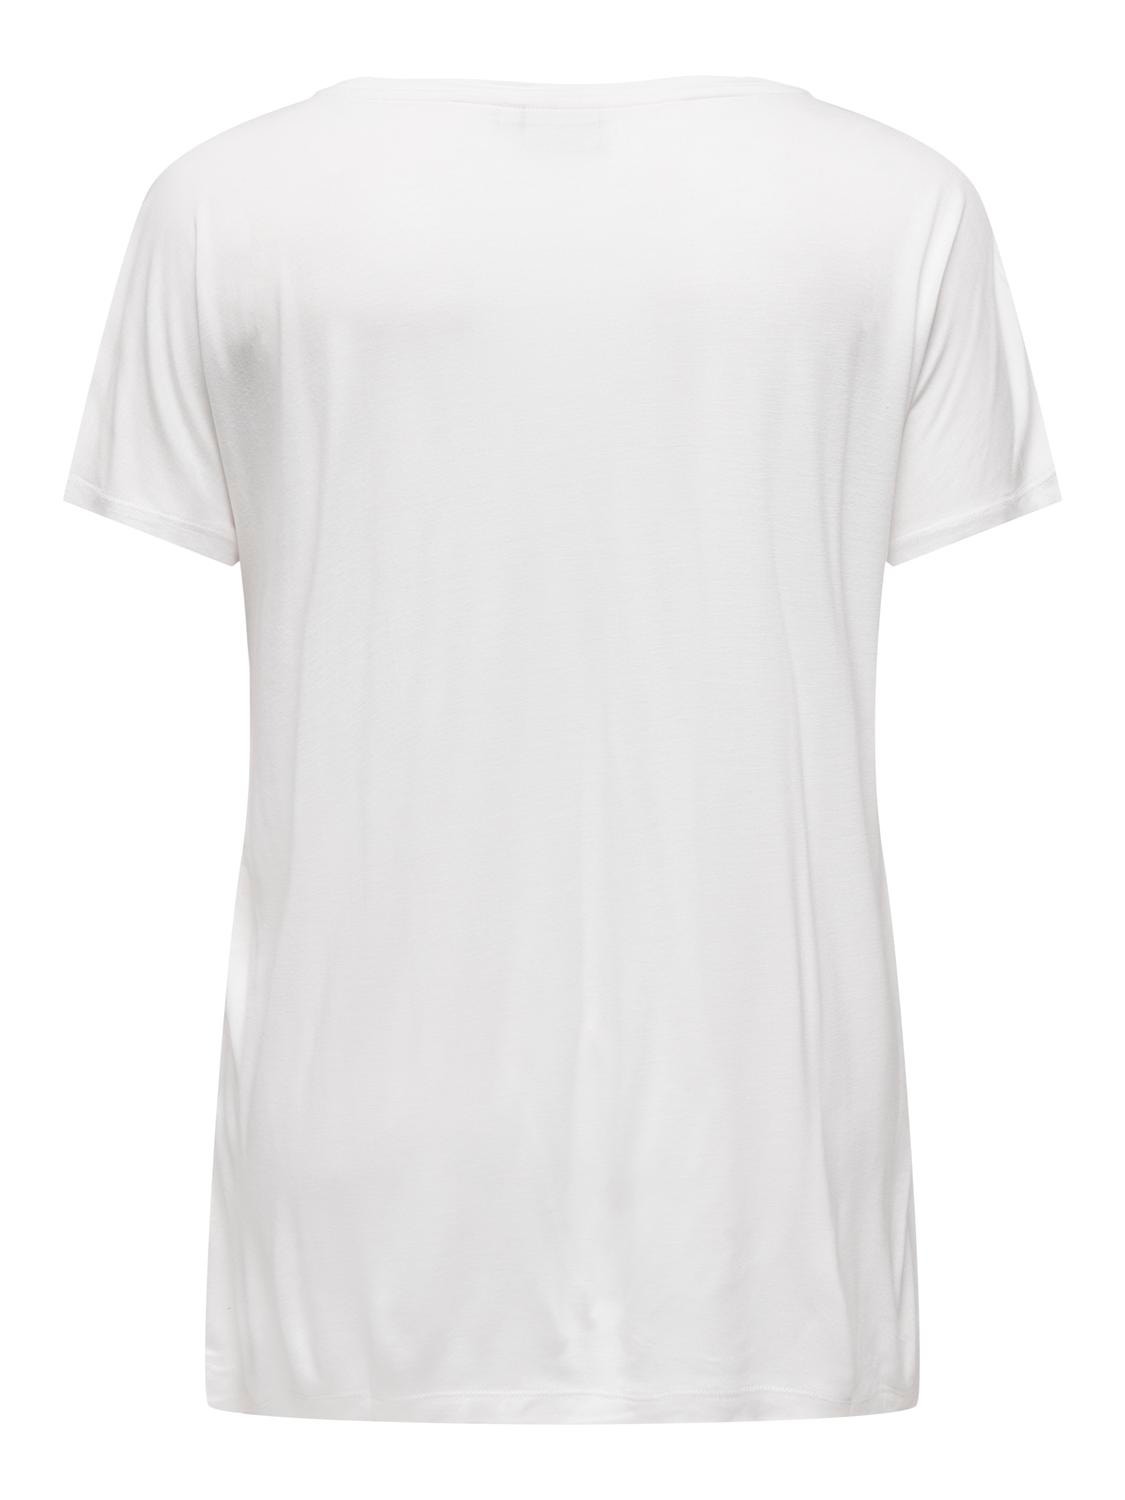 ONLY Curvy printed t-shirt -Cloud Dancer - 15319623